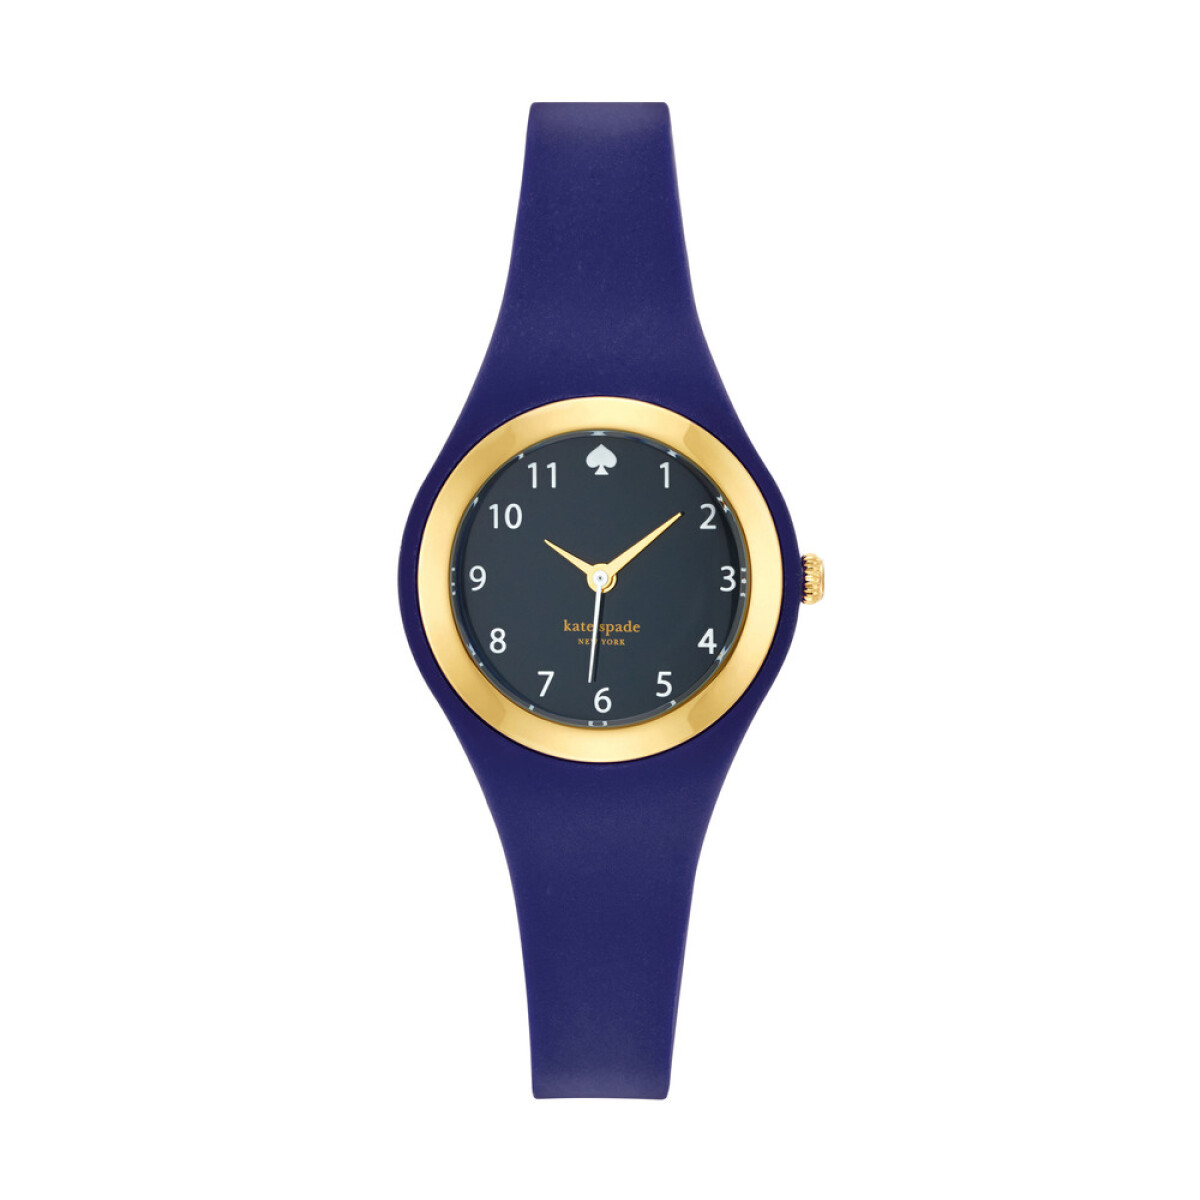 Reloj Kate Spade Fashion Silicona Azul 